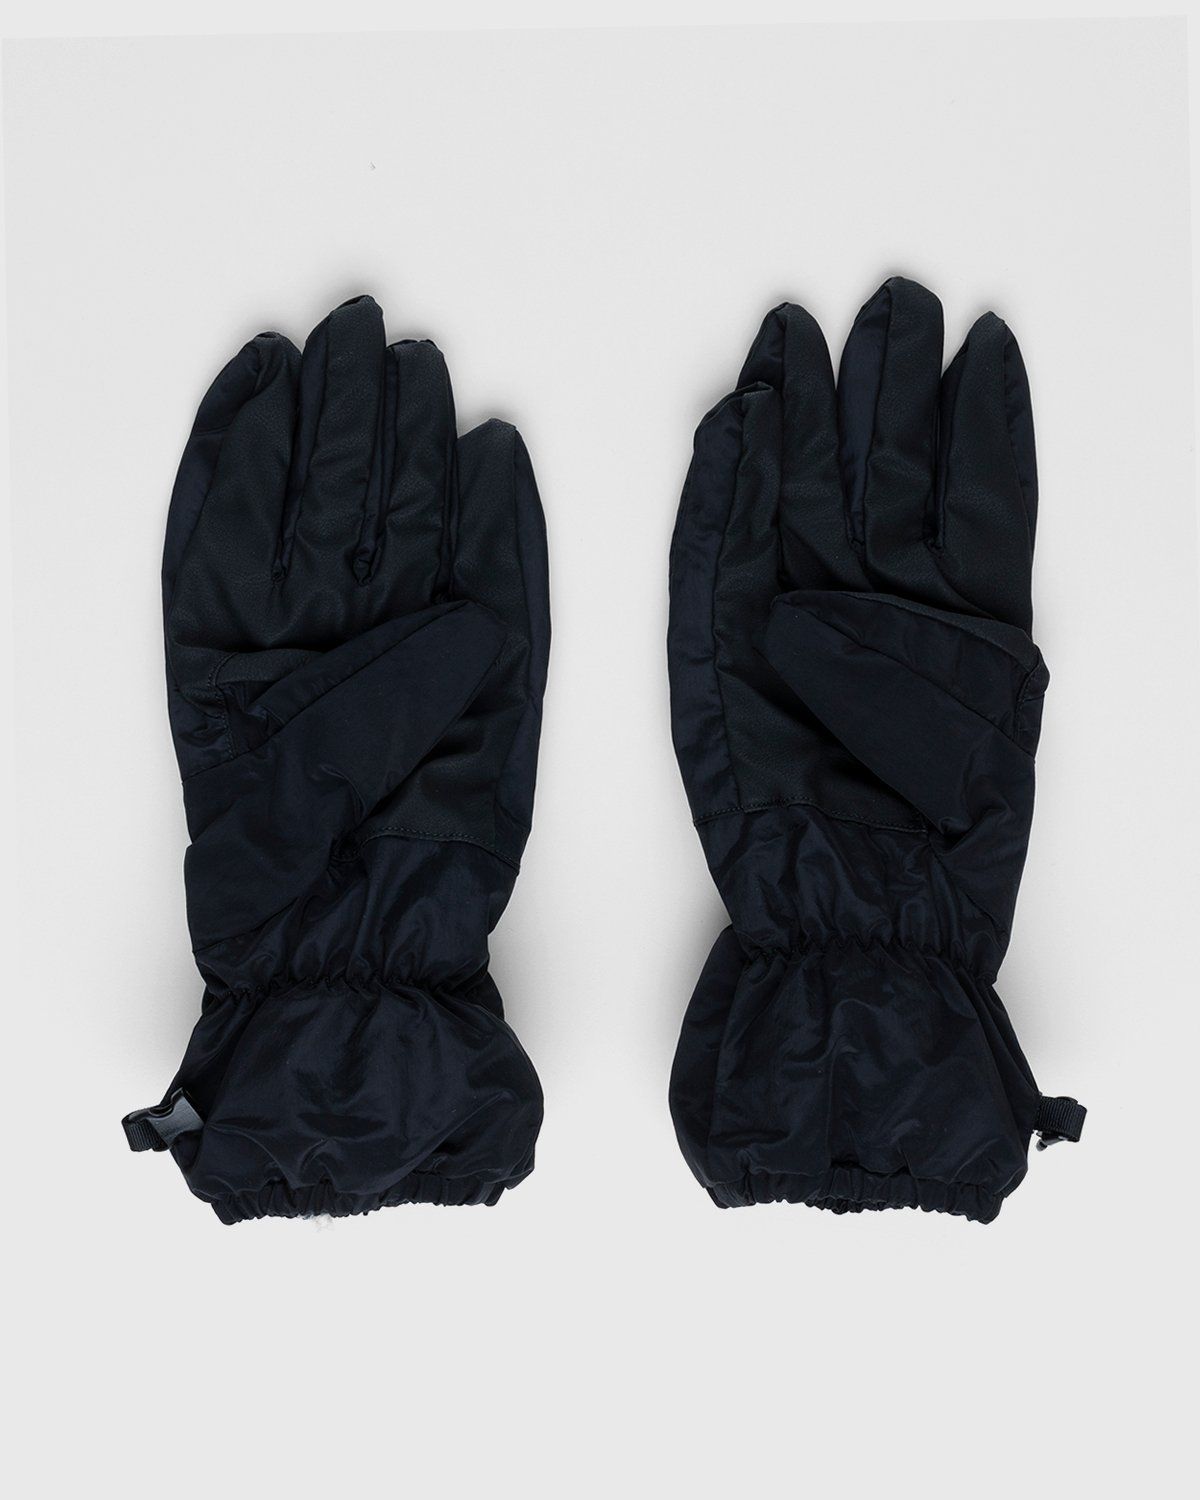 Stone Island – Gloves Black - Gloves - Black - Image 2